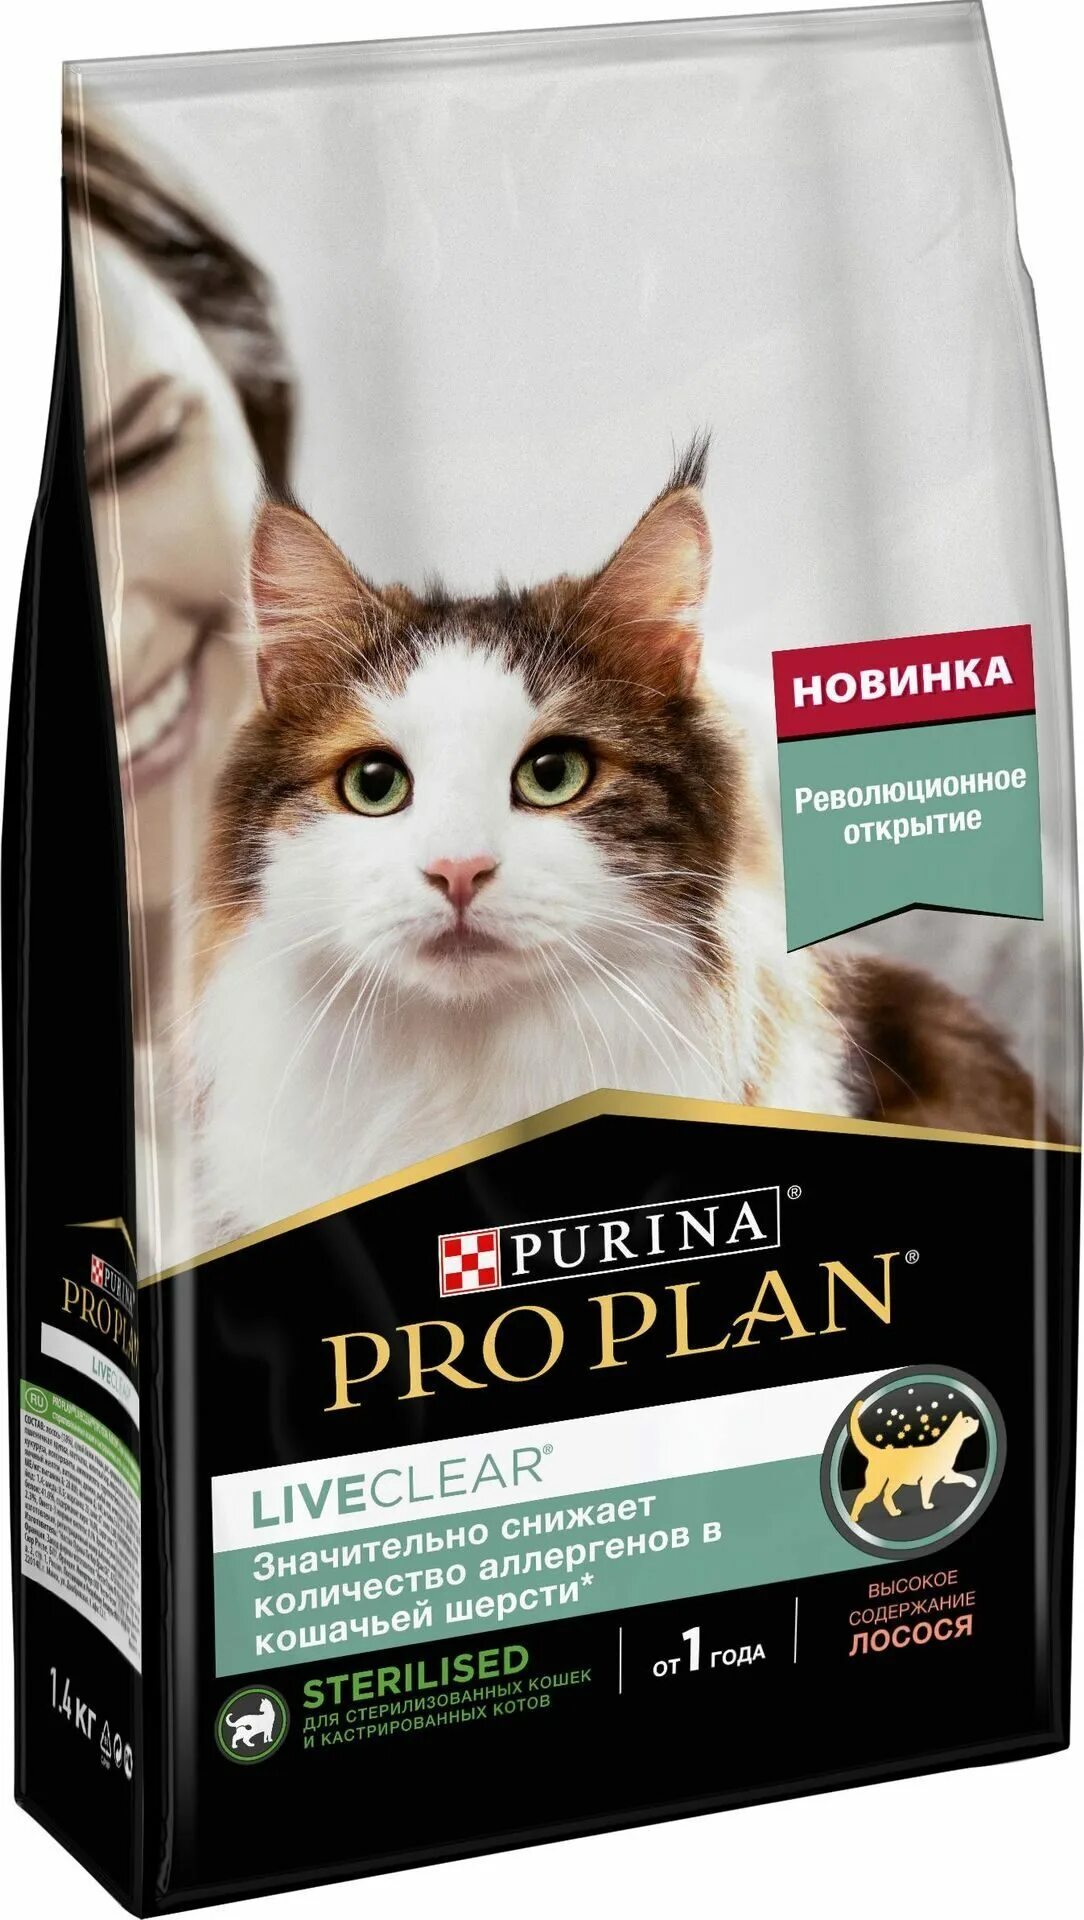 Pro Plan Sterilised для кошек. Корм Пурина Pro Plan Sterilised. Purina Pro Plan для кошек Sterilised. PROPLAN Purina liveclear 400 гр для котят. Pro plan liveclear стерилизованных